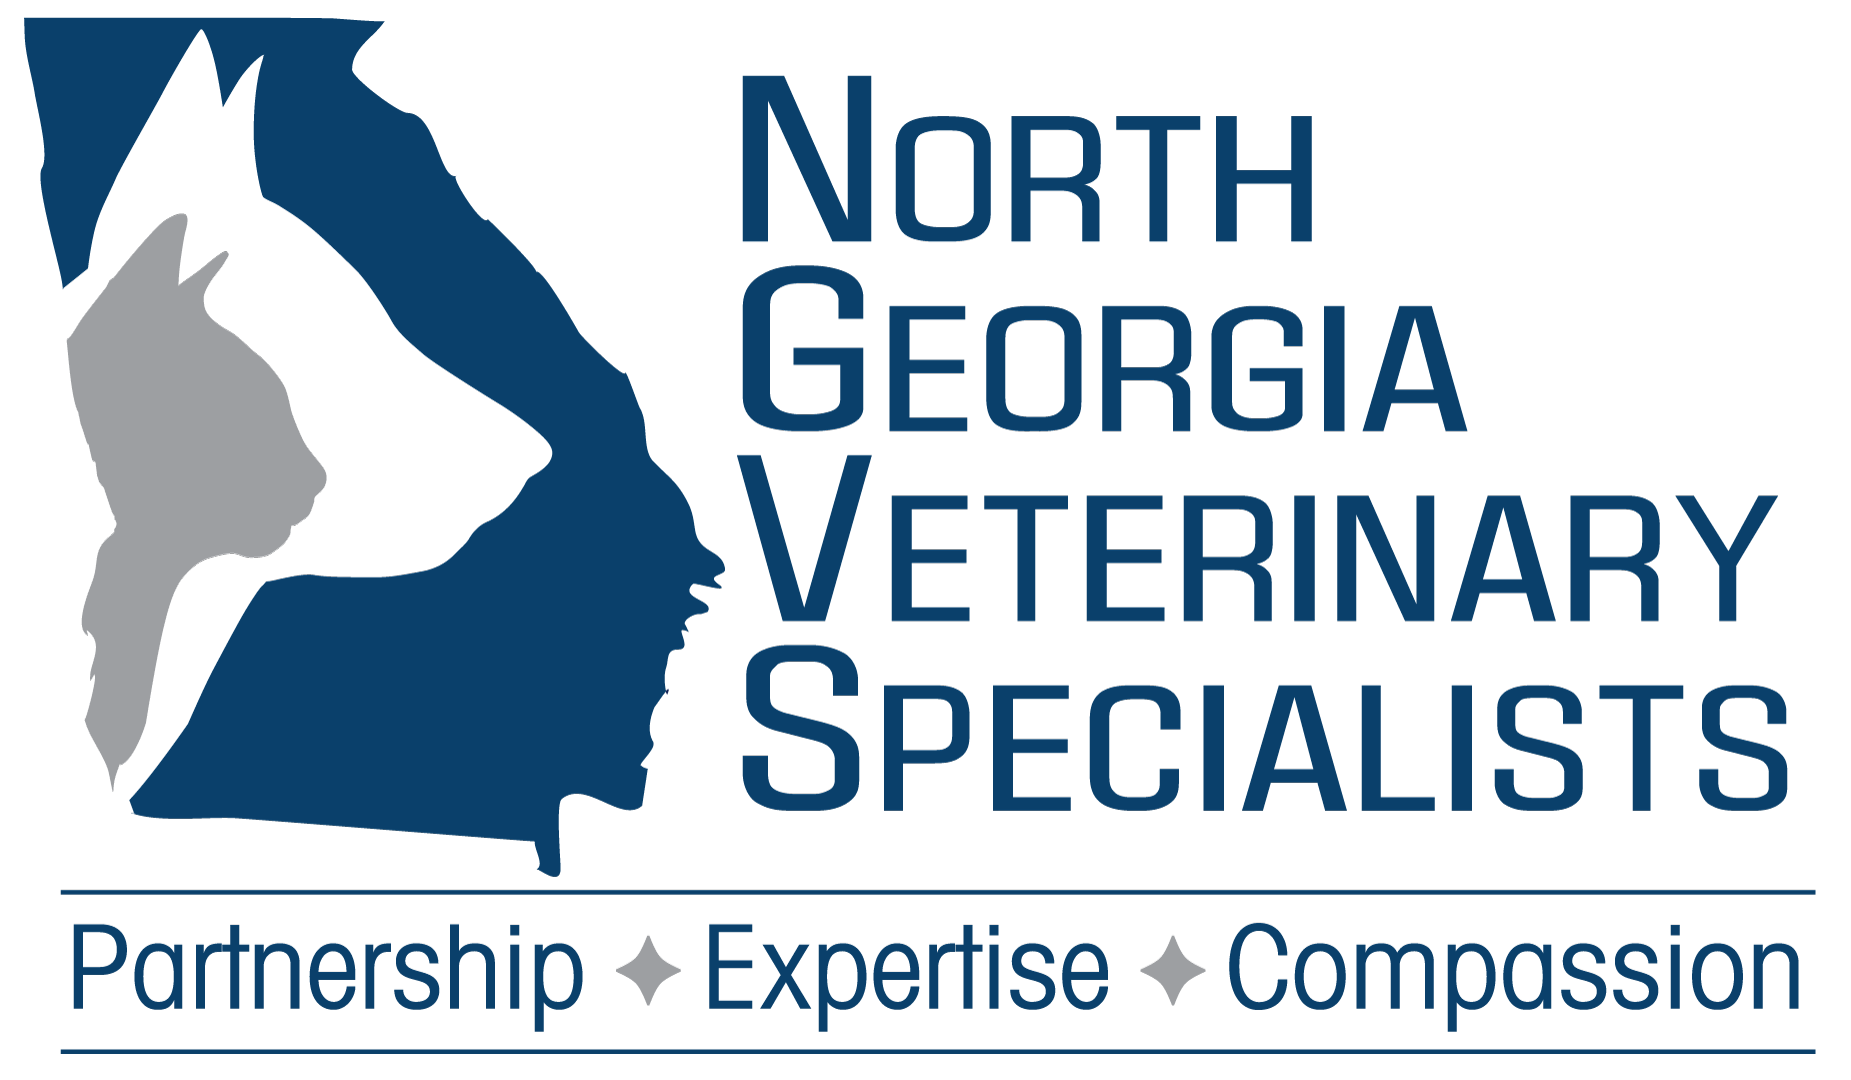 Primary Care Animal Hospitals - North Georgia Veterinary Specialists |  North Georgia Veterinary Specialists | Partnership • Expertise • Compassion